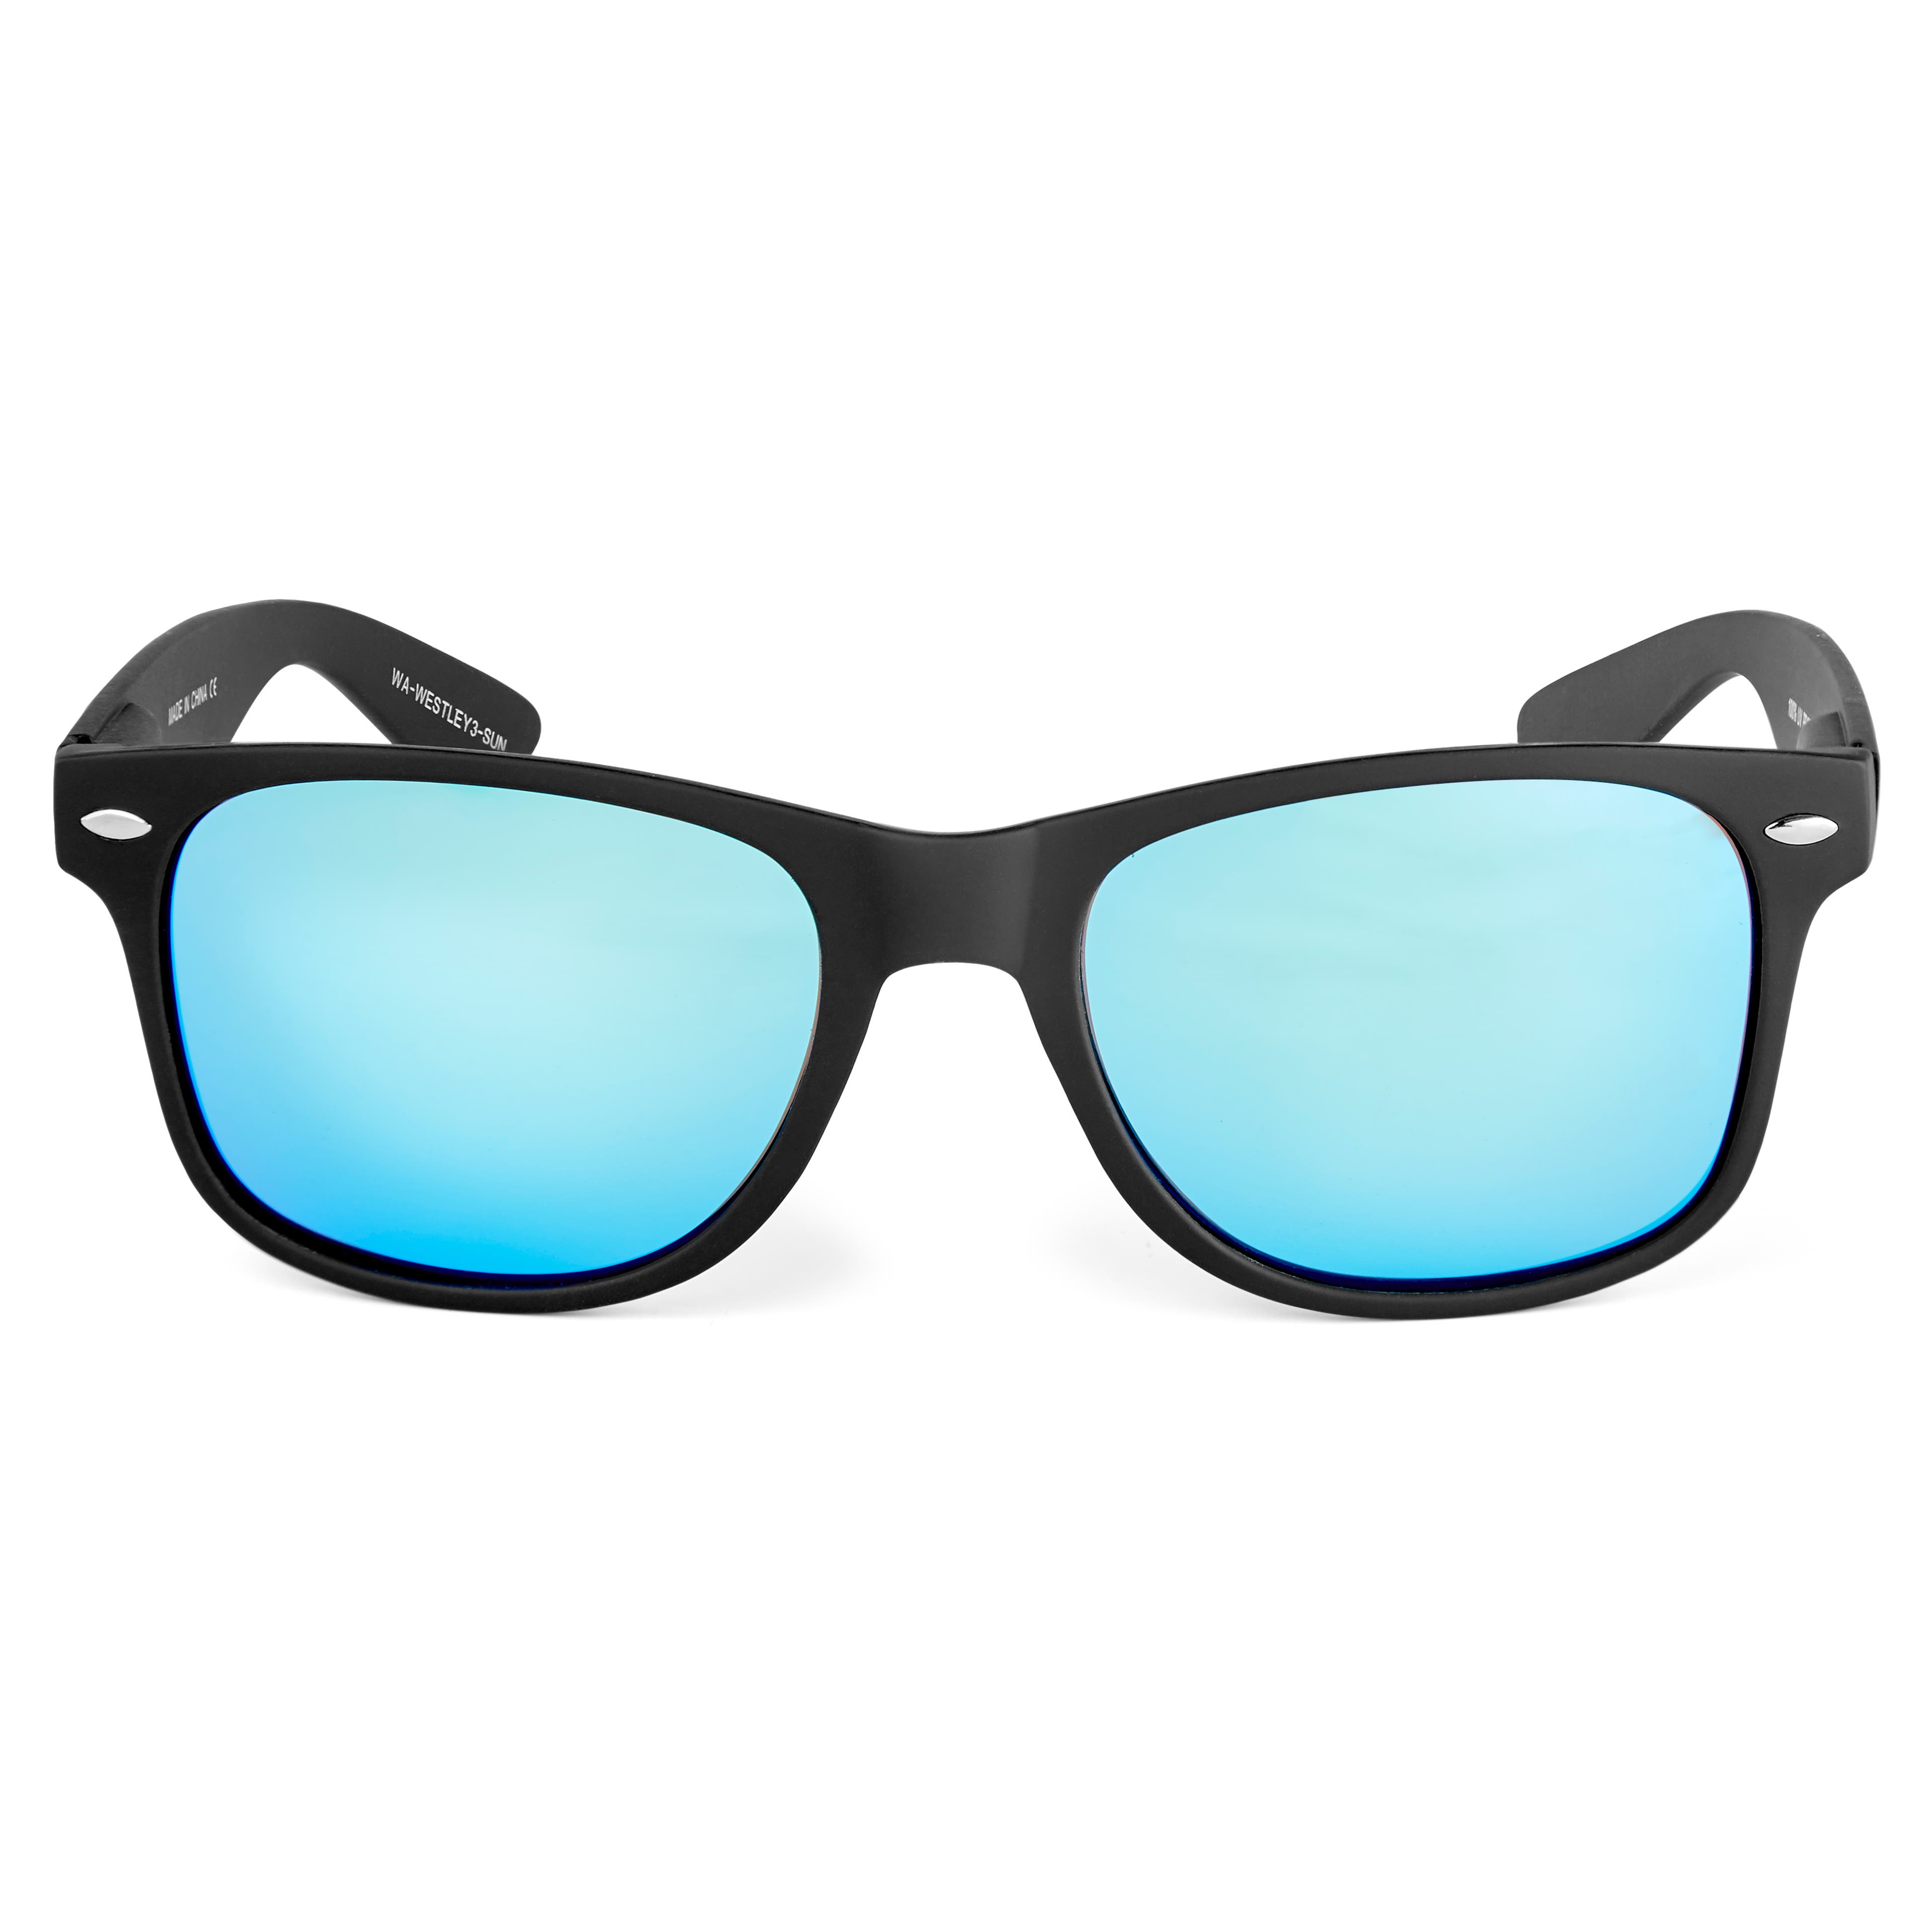 Westley Vista Solbriller med Blå Speilglass